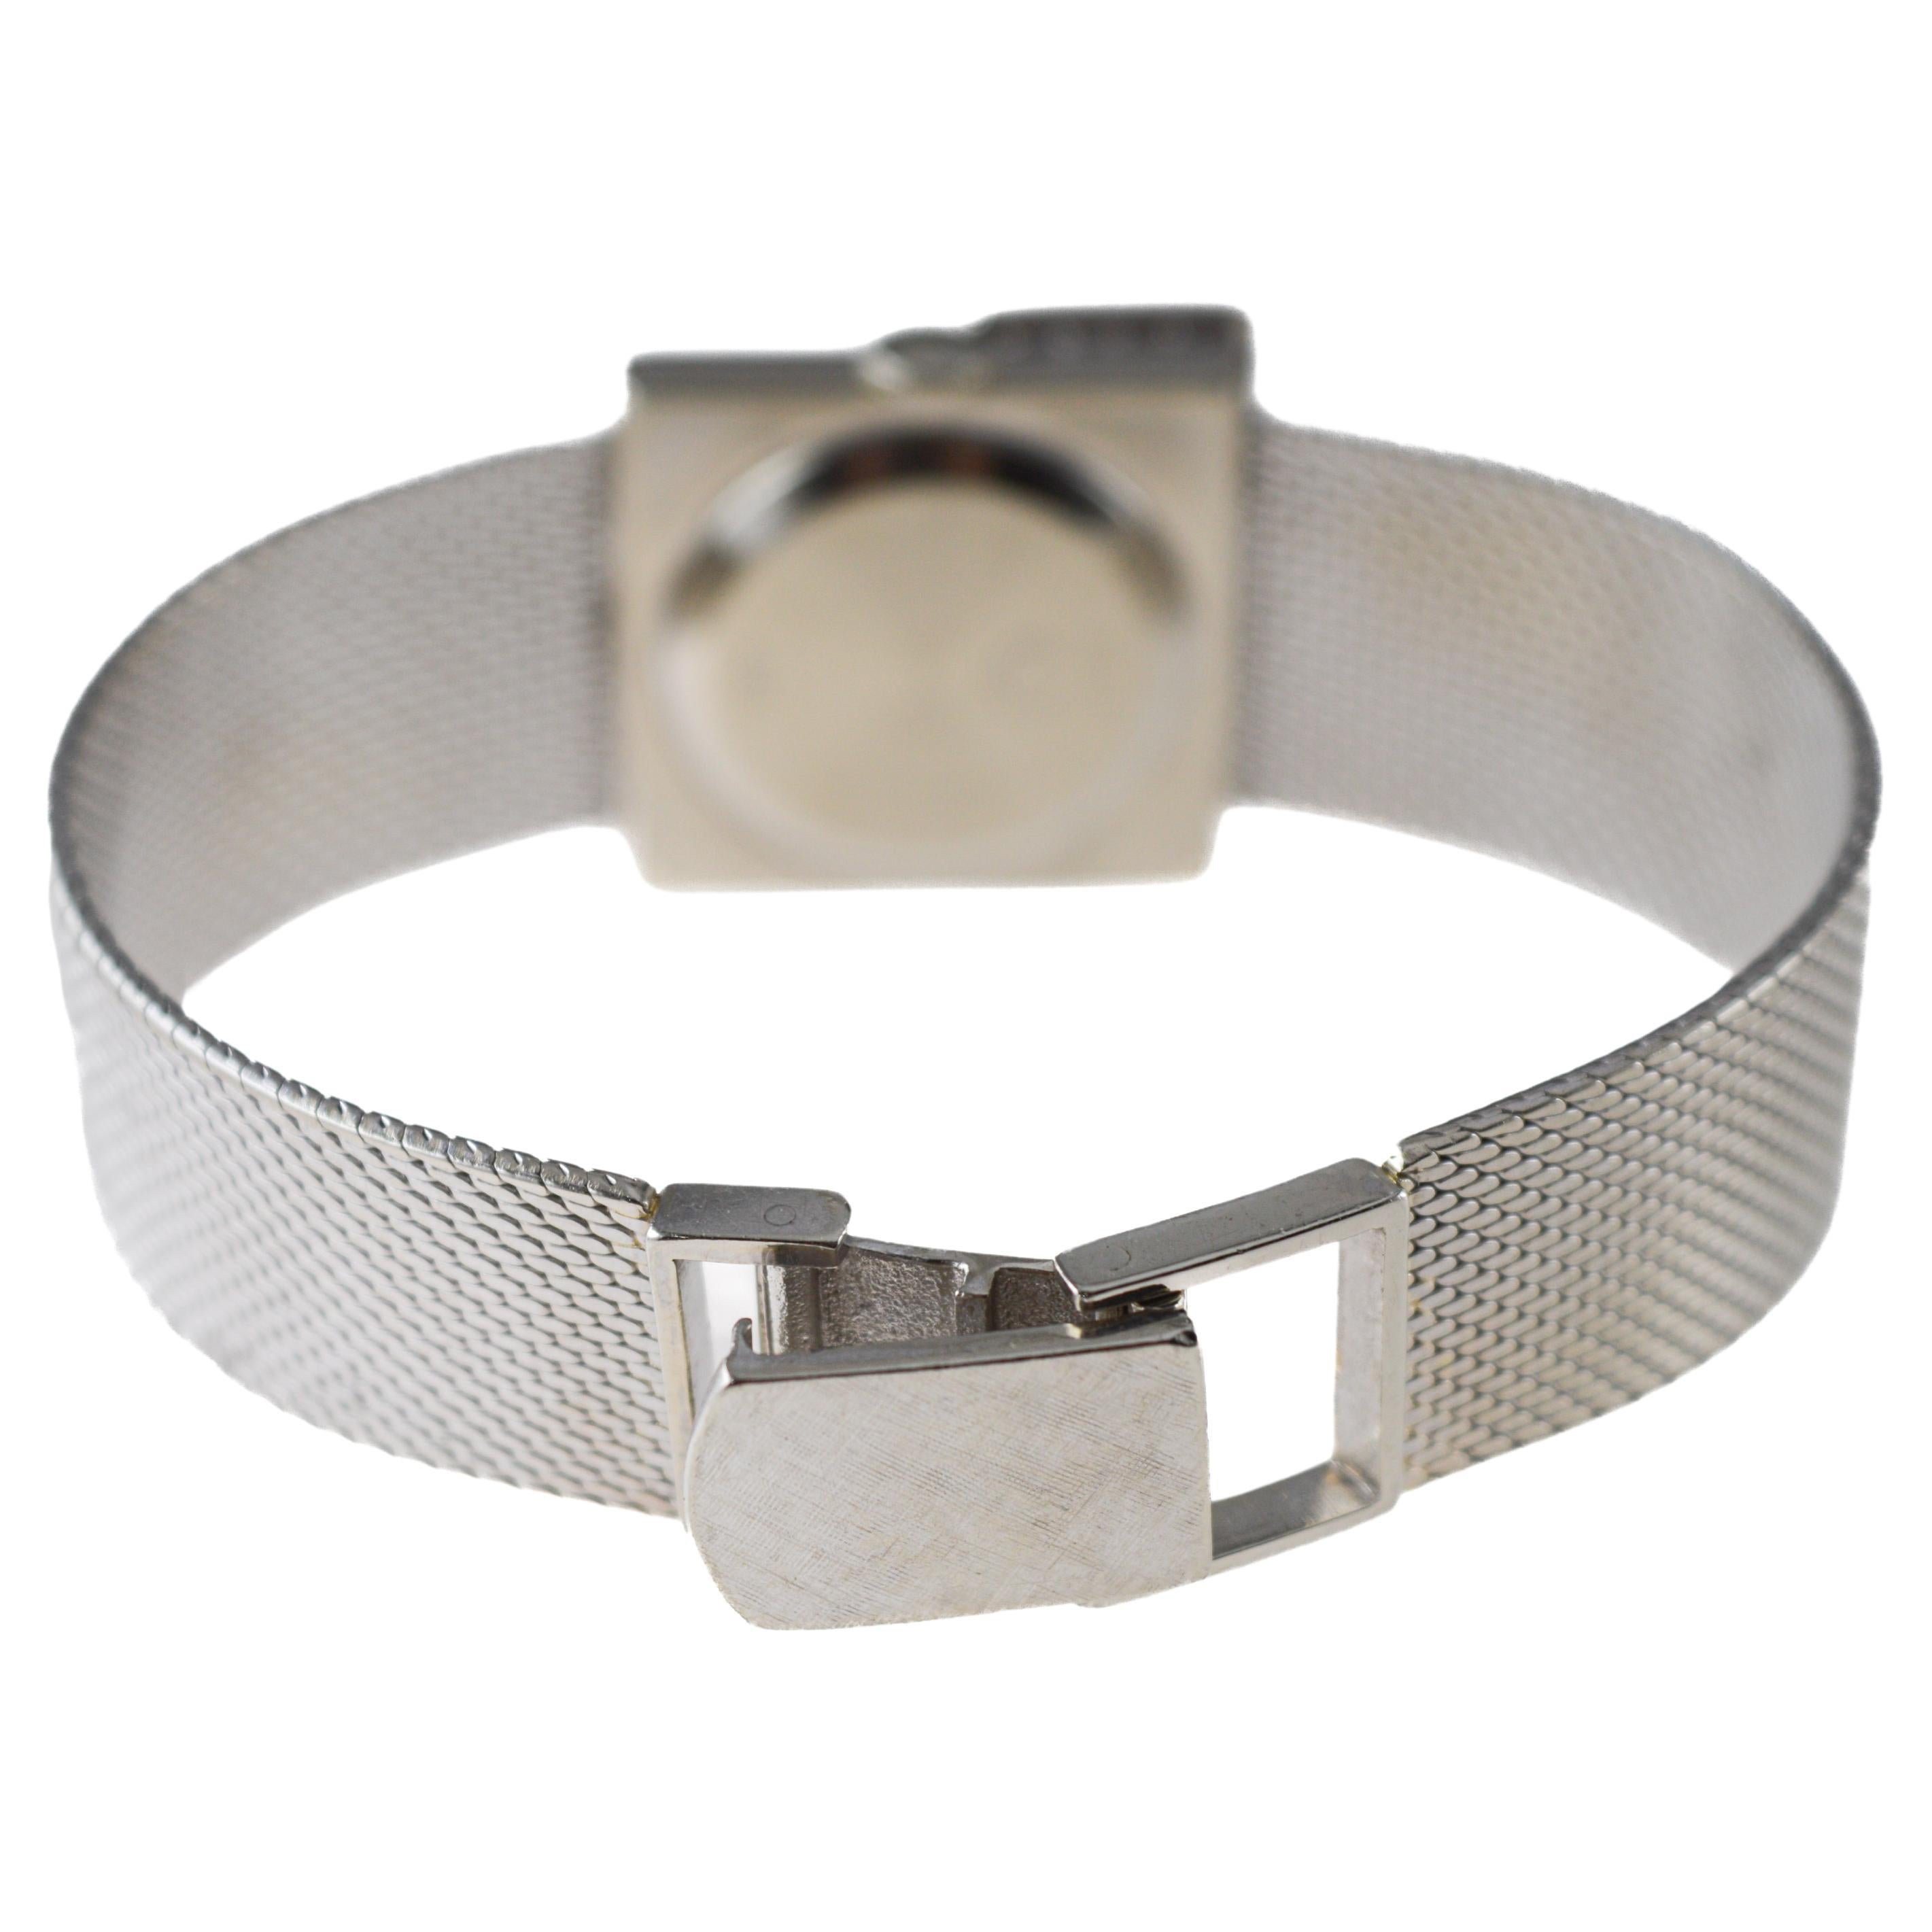 Baume Mercier 14Kt. Solid White Gold Bracelet Watch with For Sale 5